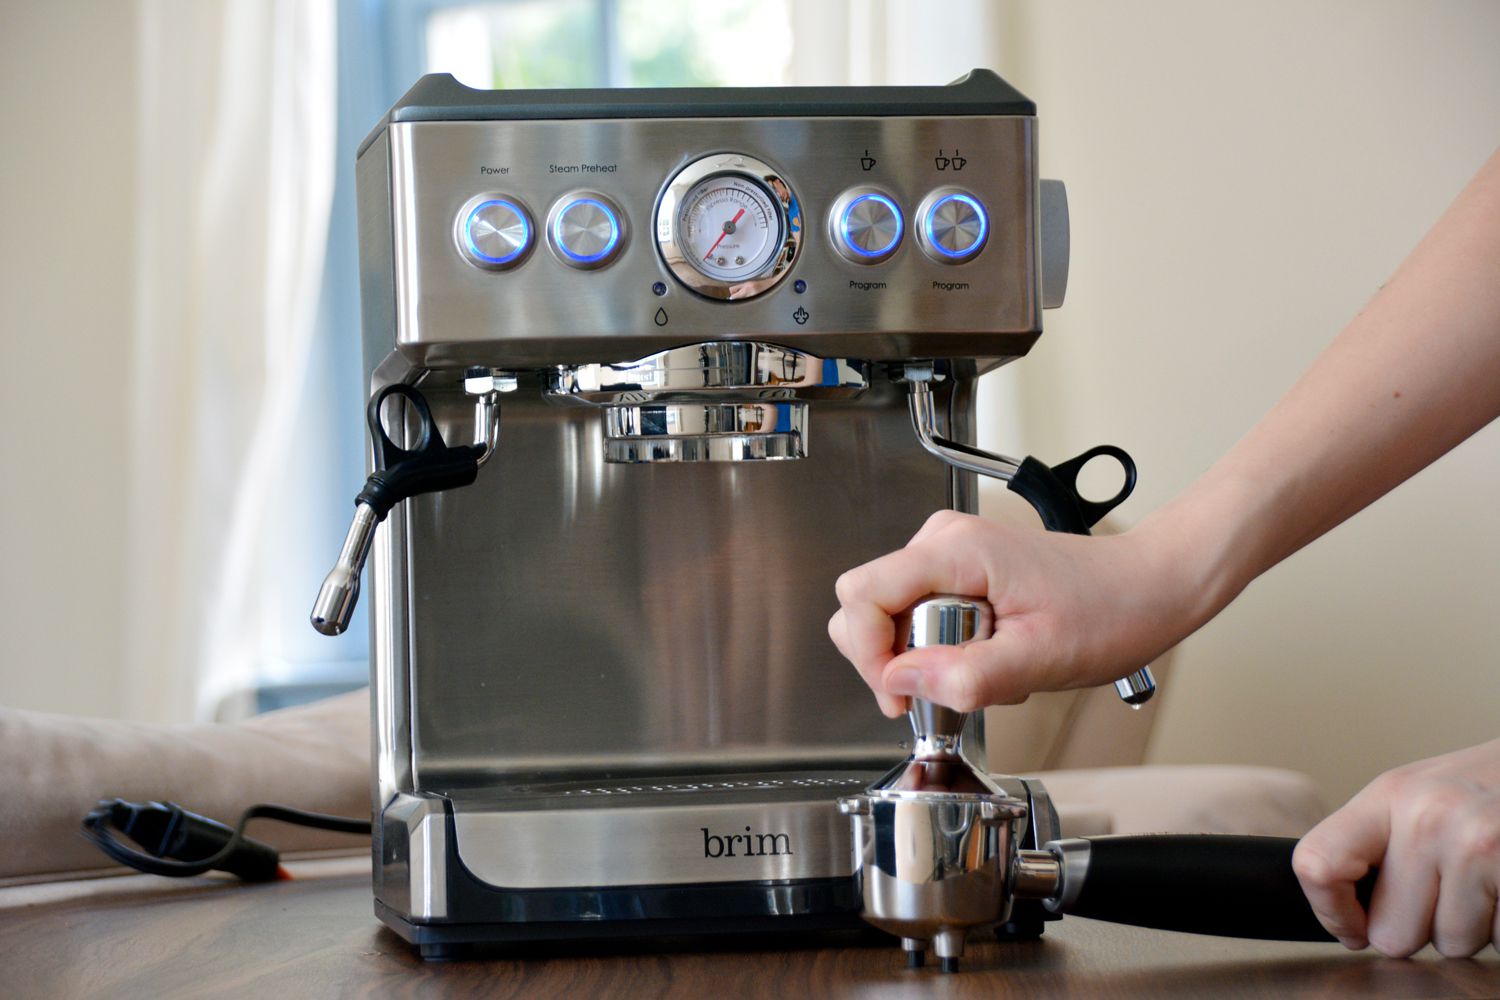 How To Use The Brim Espresso Machine